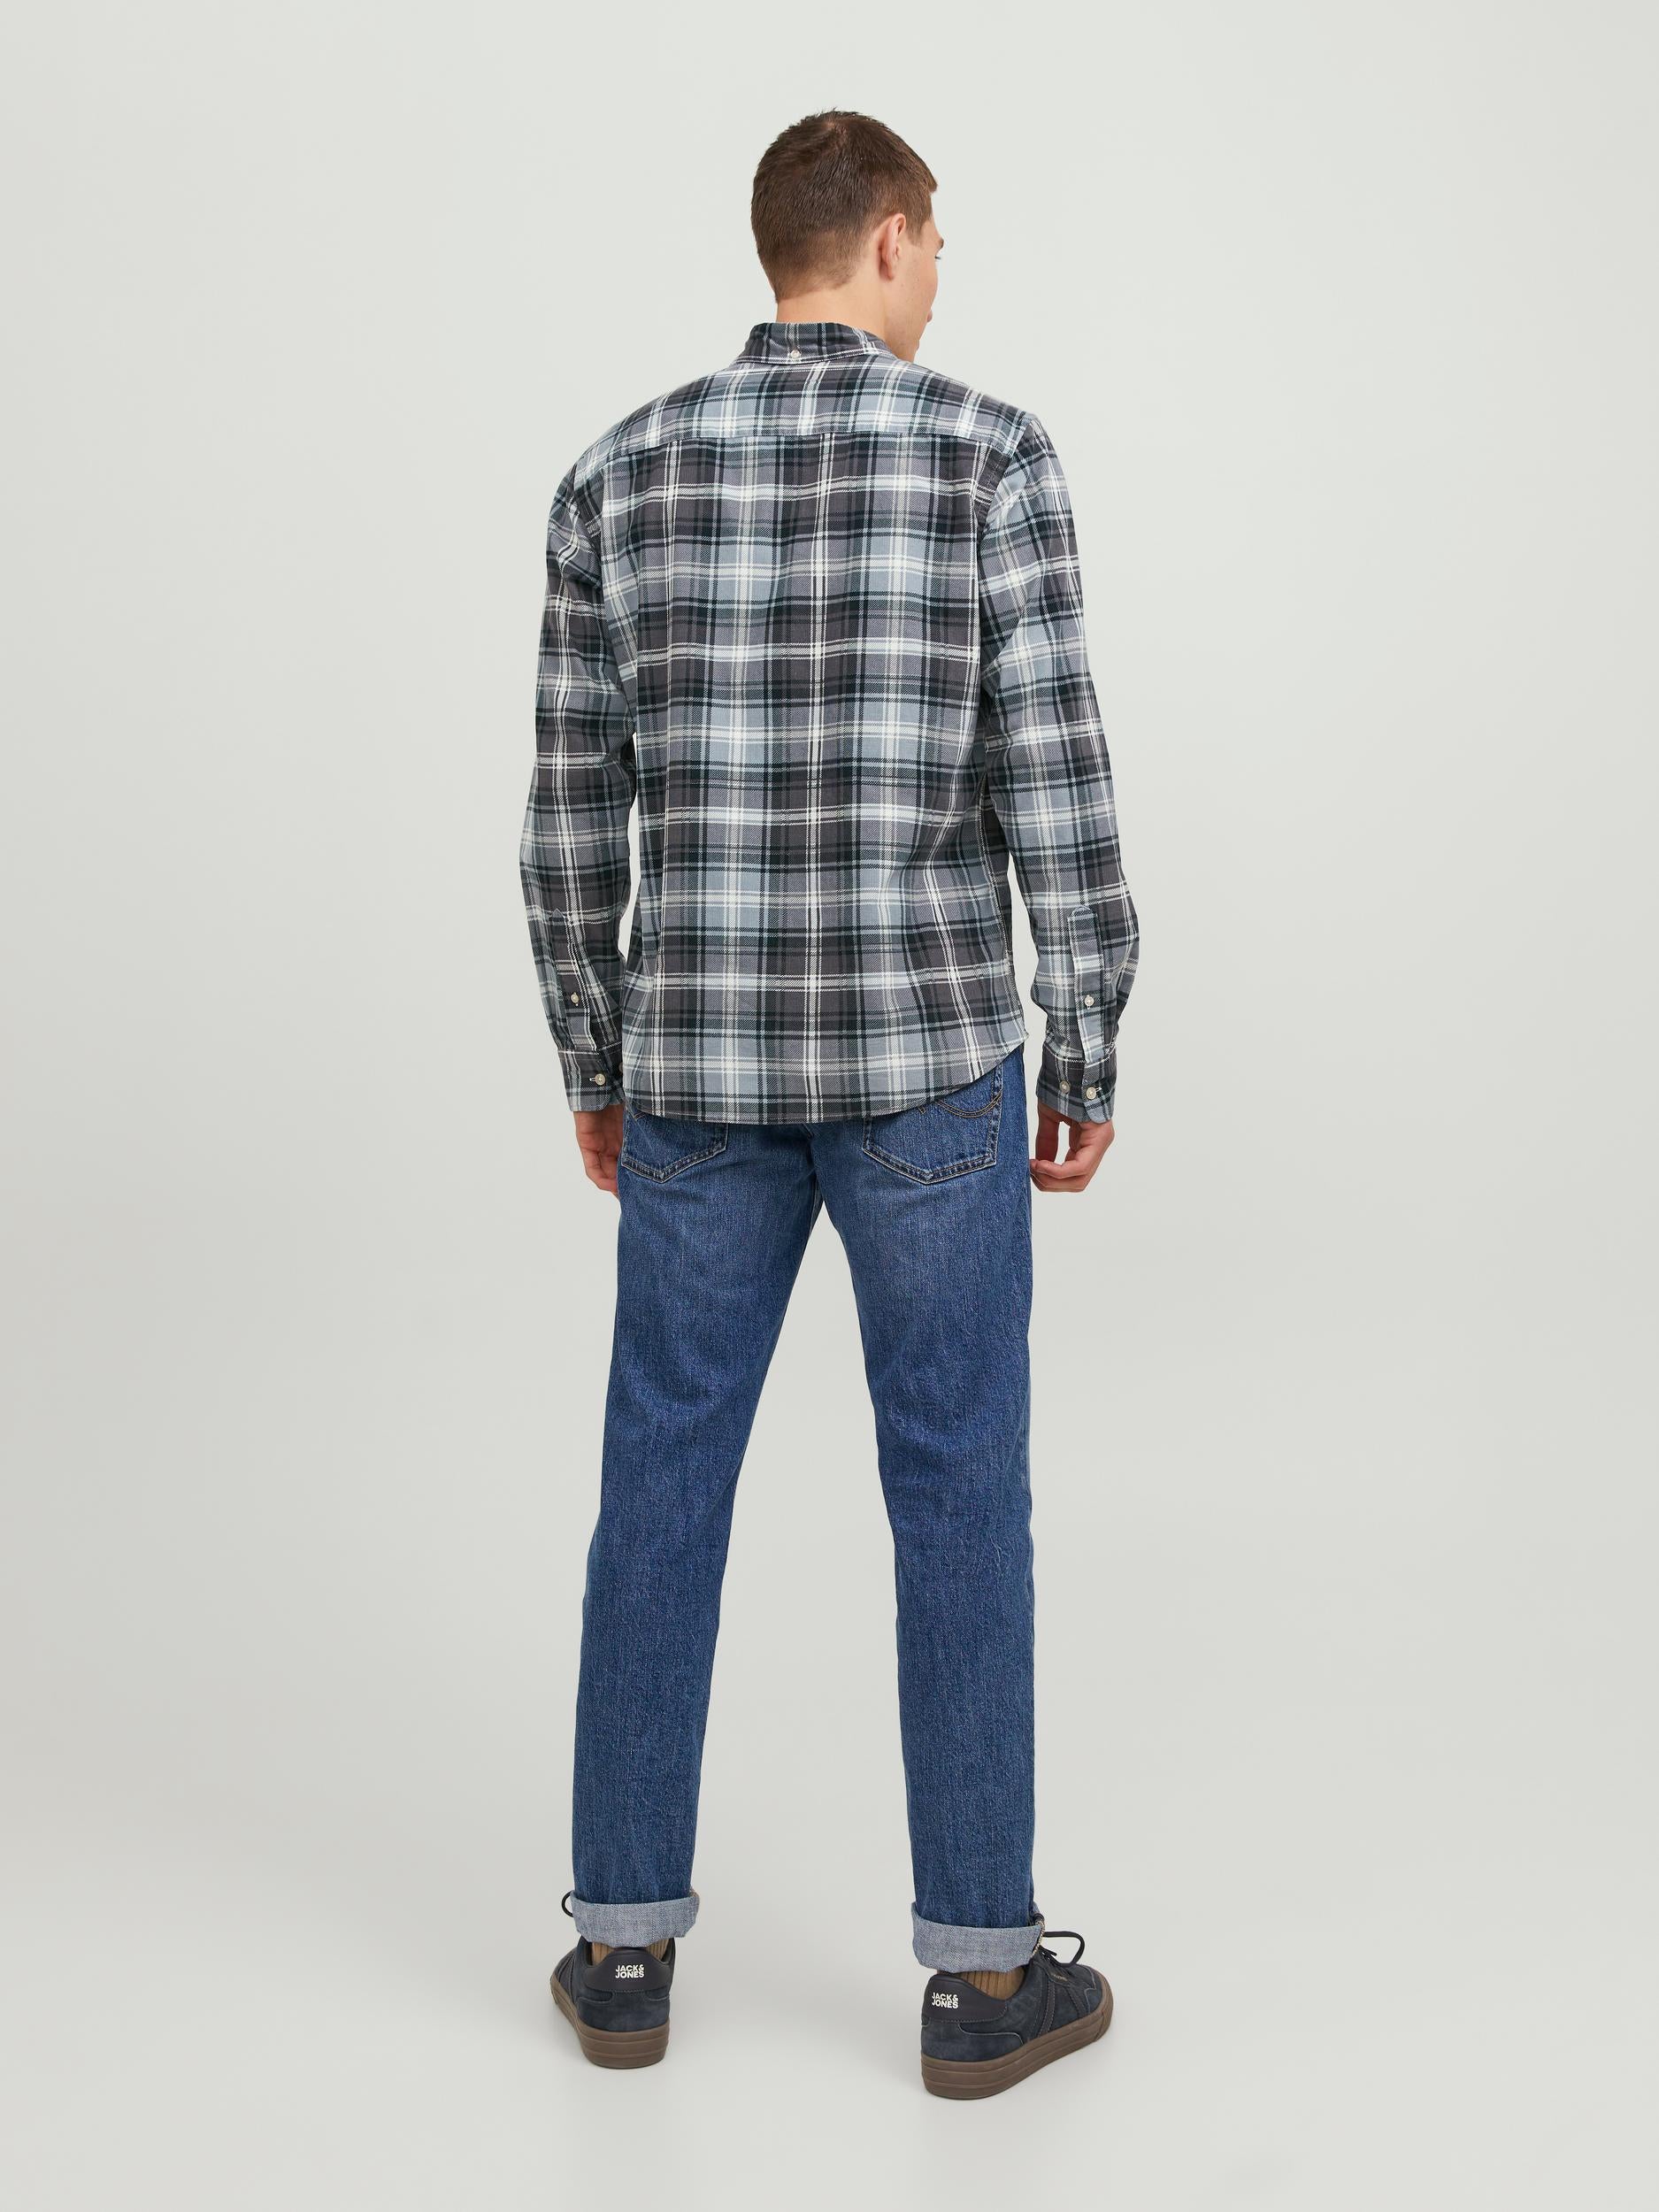 Men's Brook Cord X-mas Shirt Long Sleeve-Whisper White-Model Bakc View